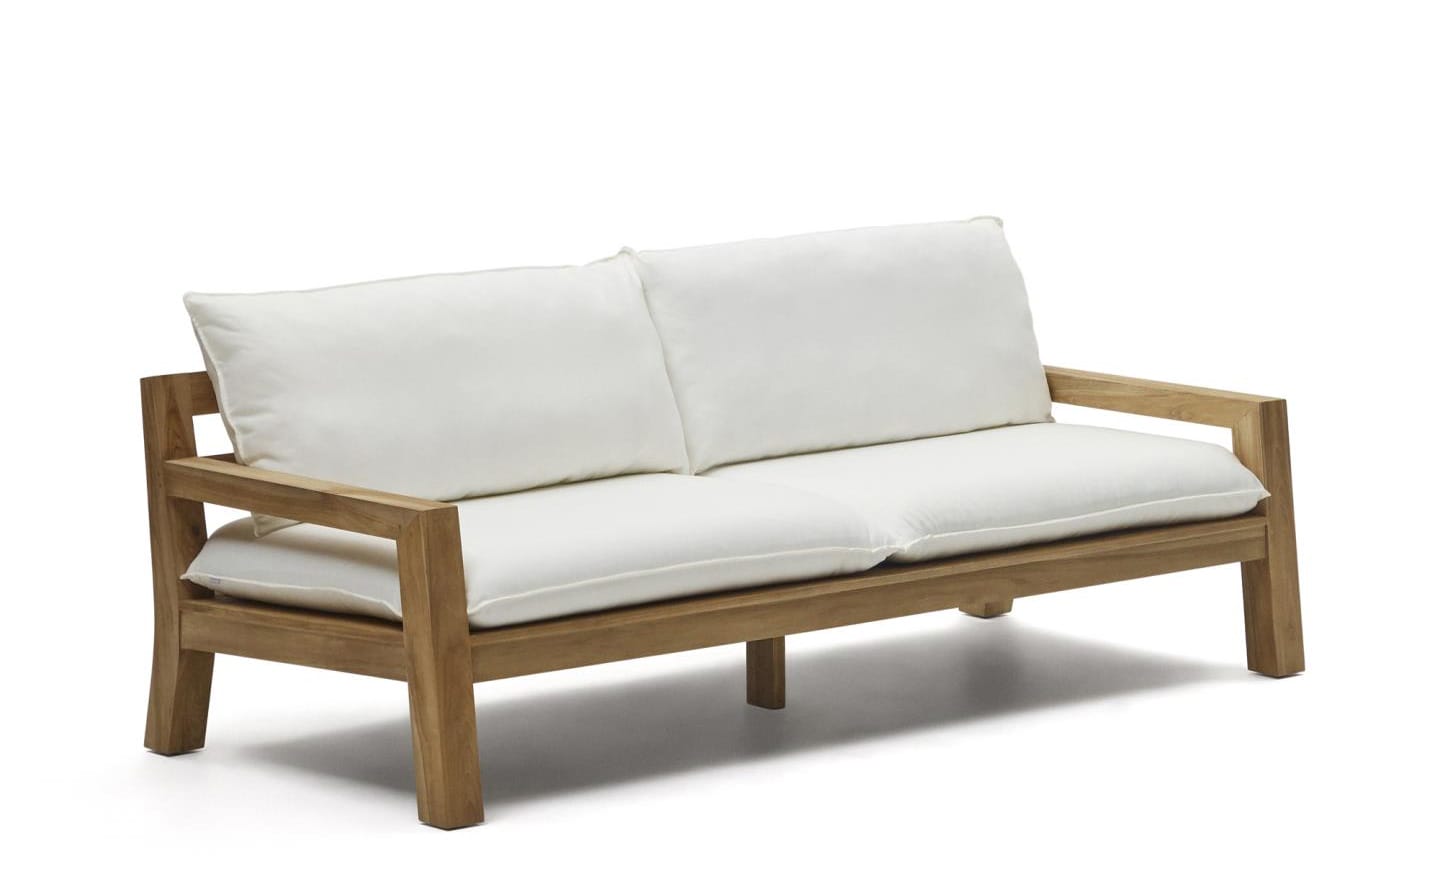 Sofá de 3 Lugares de Exterior Forcanera, madeira maciça de teca, almofada incluída, ideal para ambientes cobertos